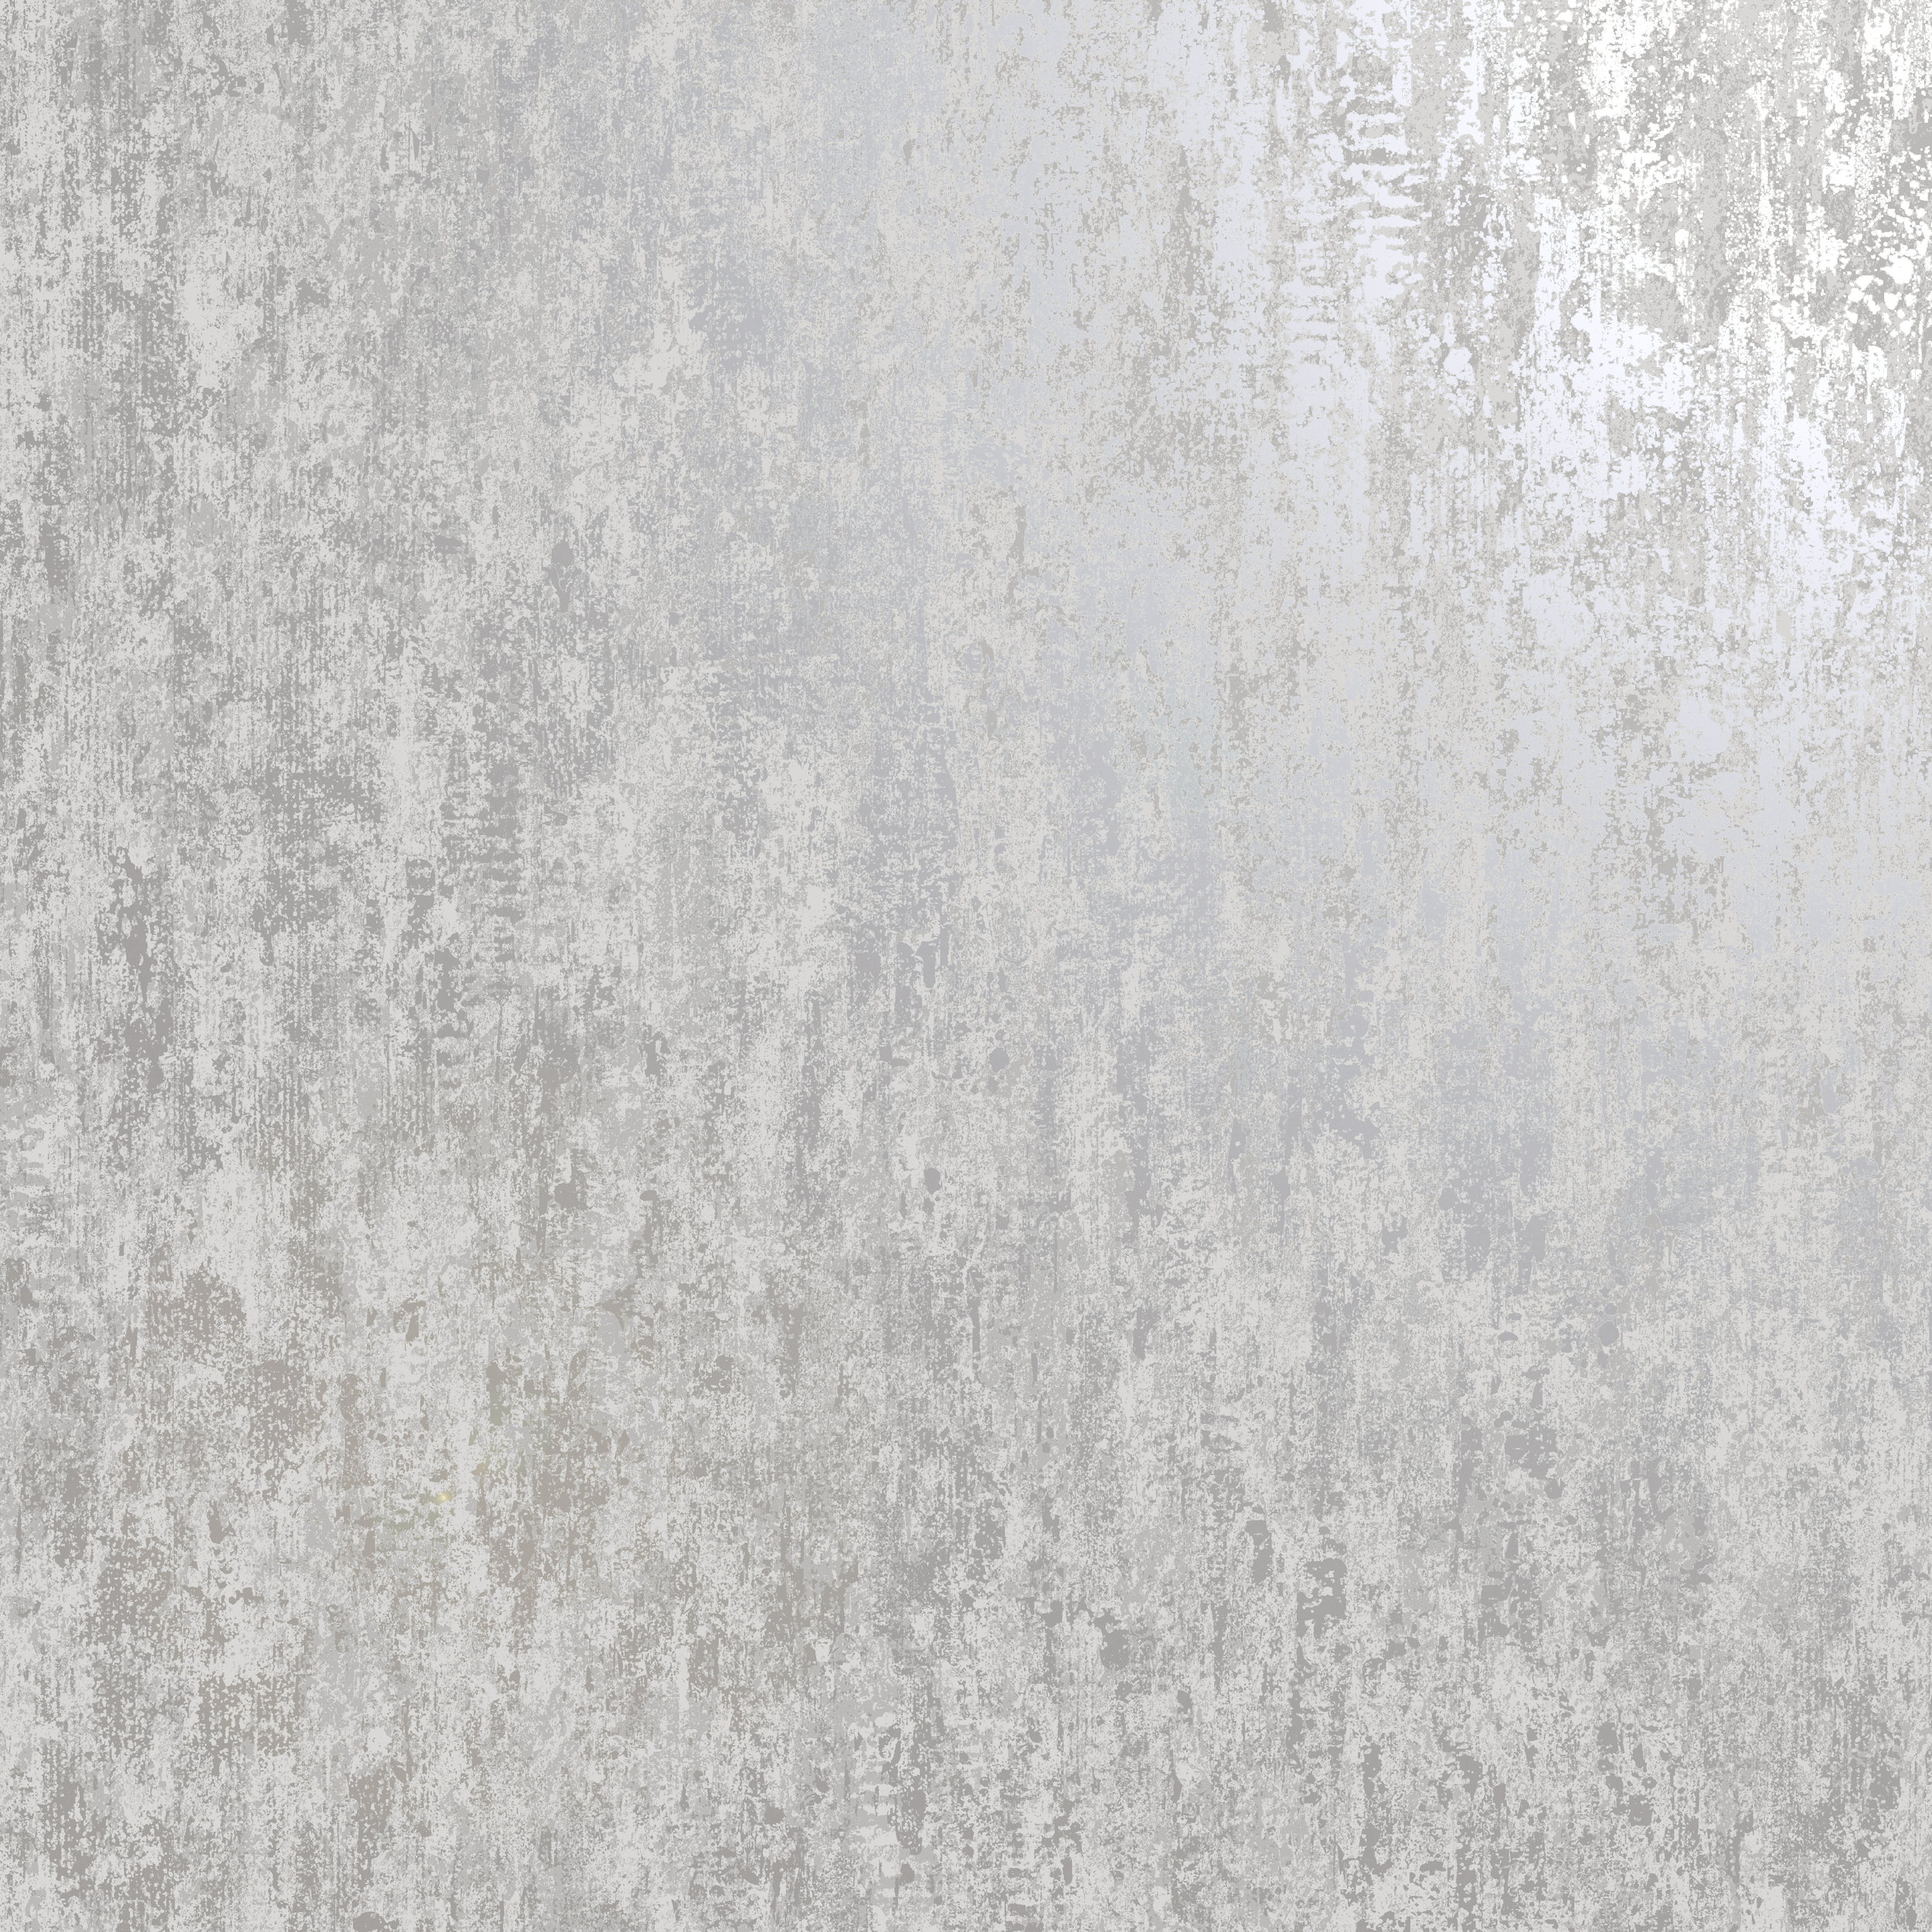 Holden Decor Industrial Texture Grey Wallpaper - 10.05m x 53cm